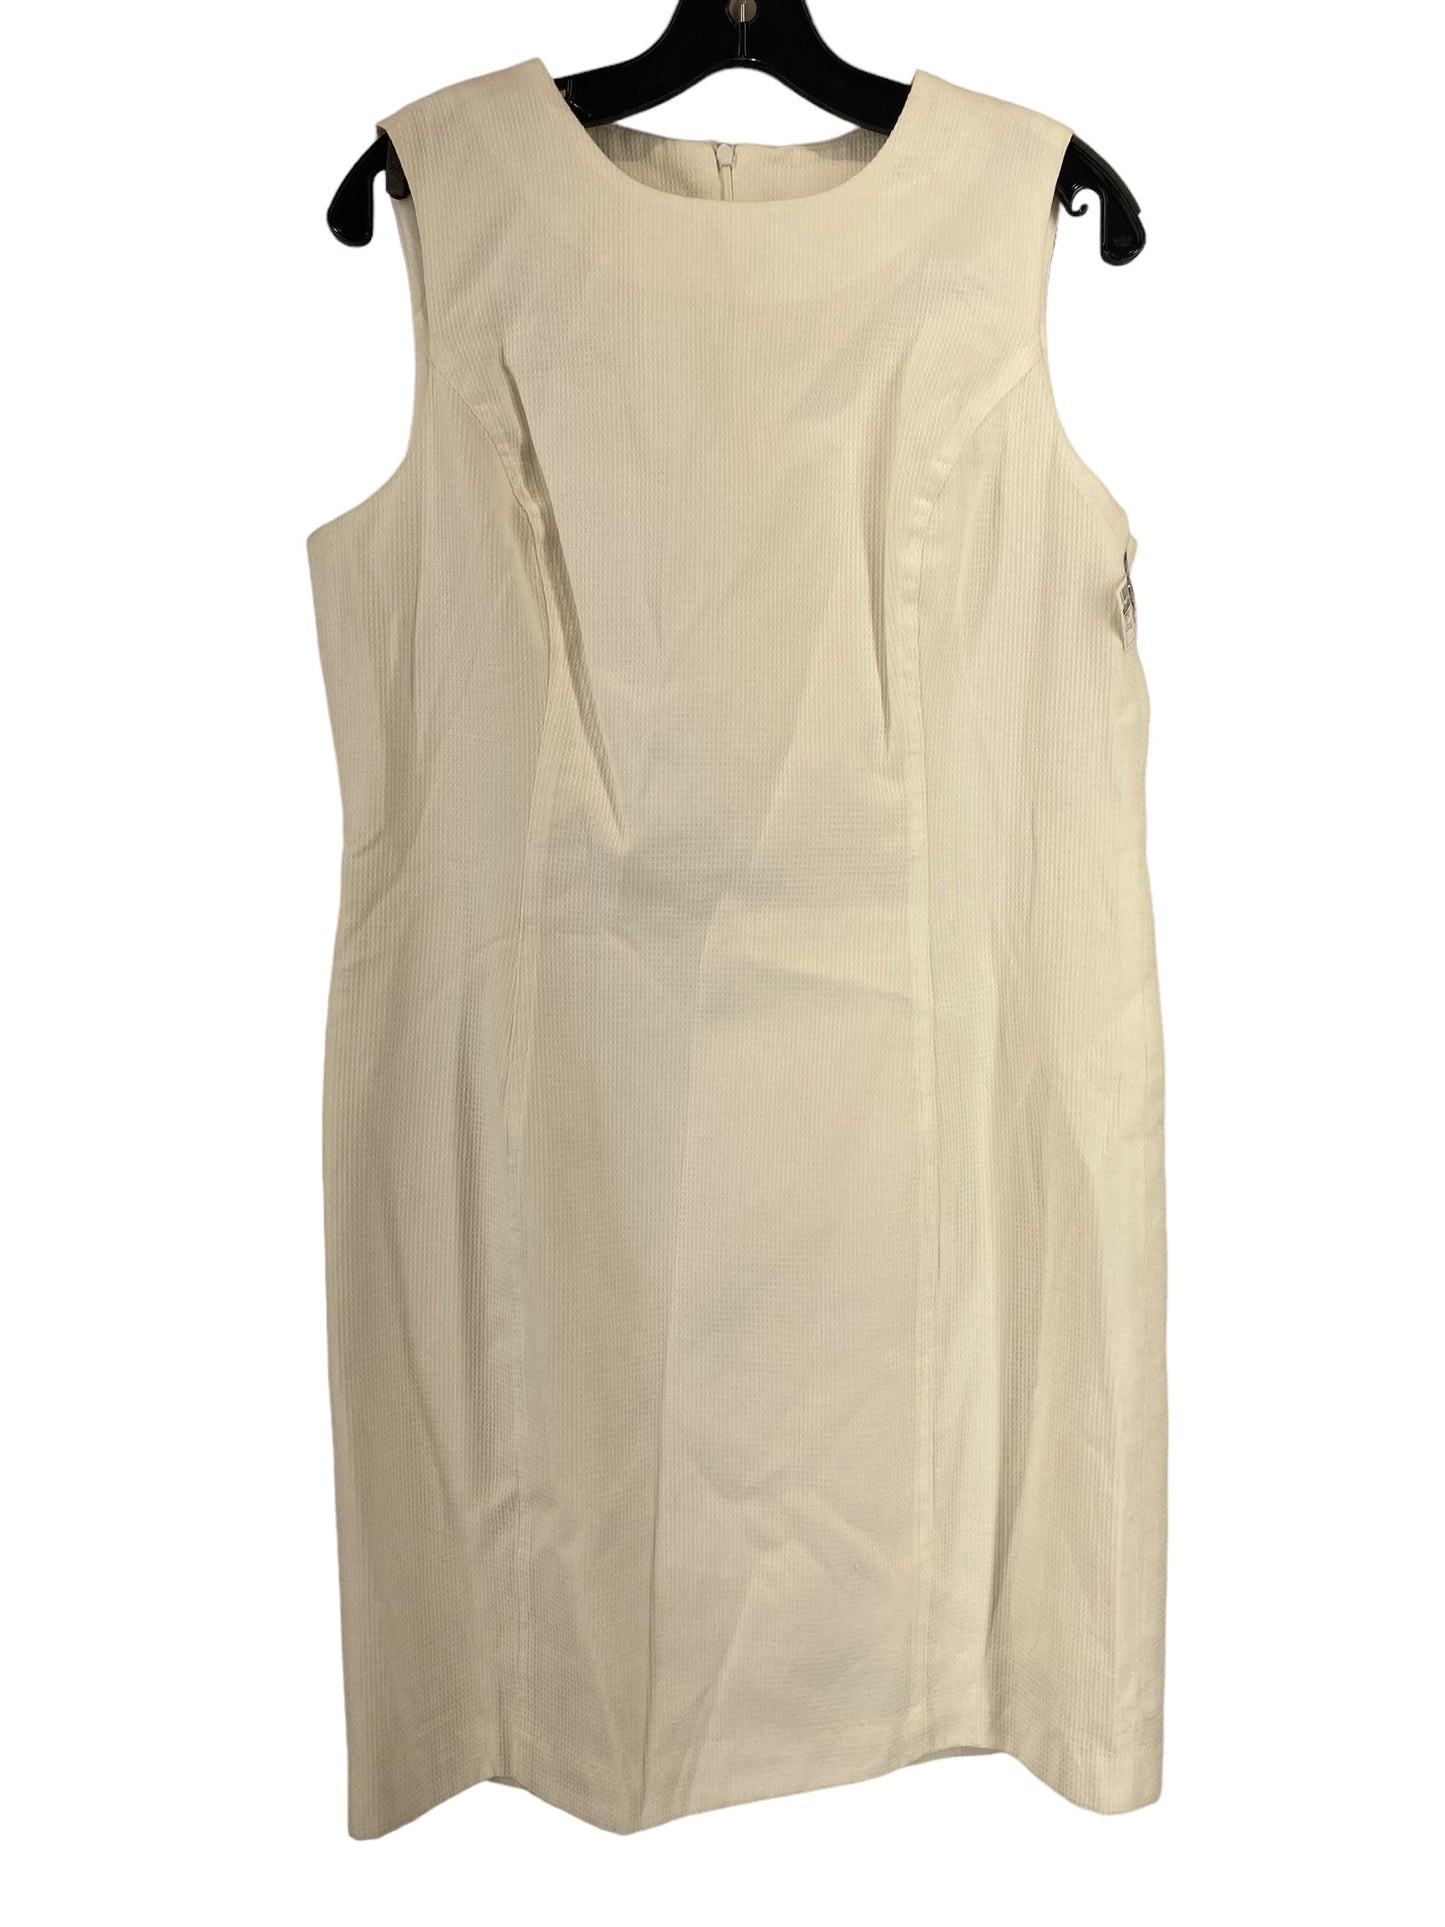 White Dress Work Preston And New York, Size 12